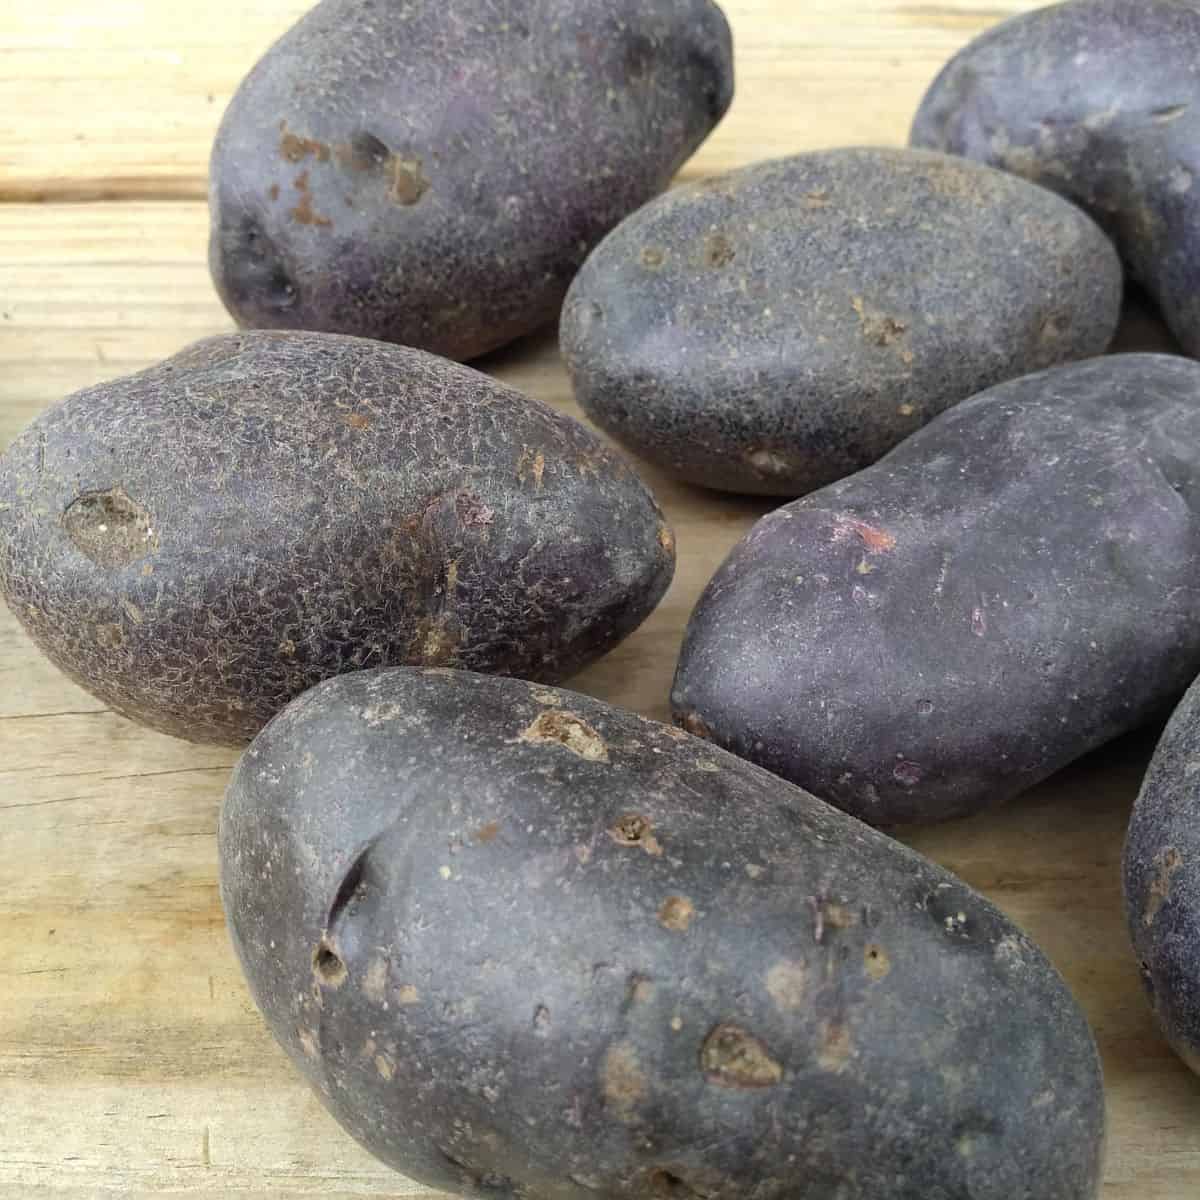 Large purple potatoes on a wood board.